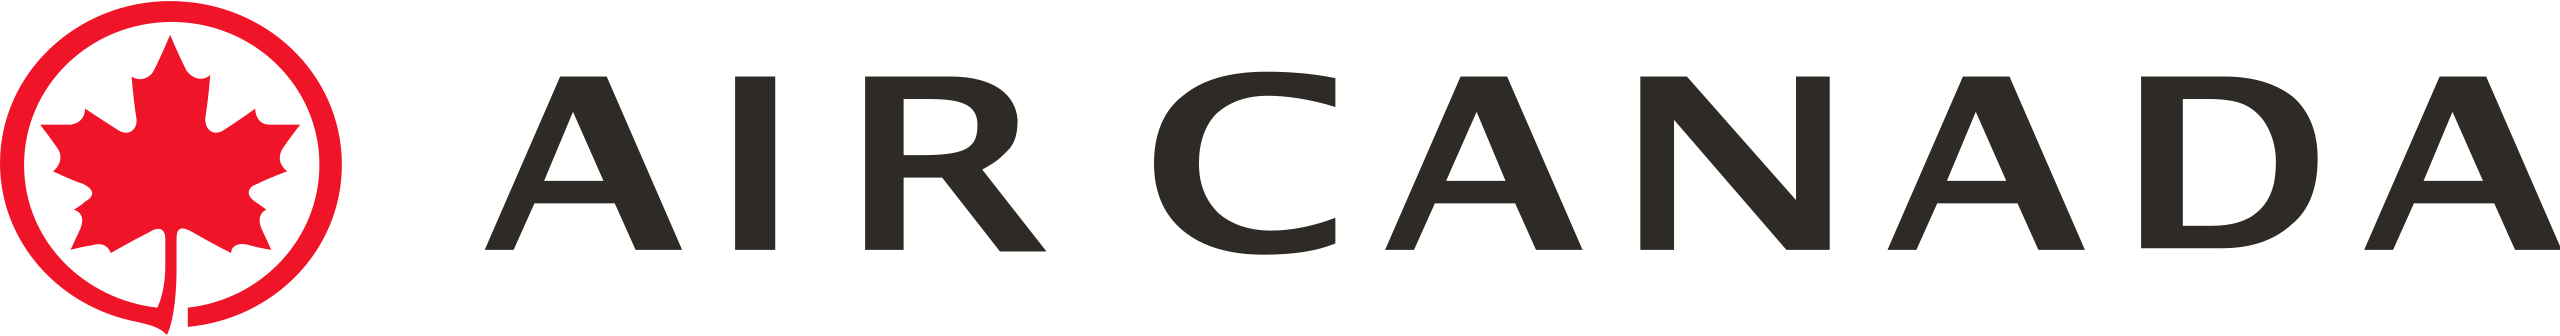 Air Canada logo / Logo de Air Canada